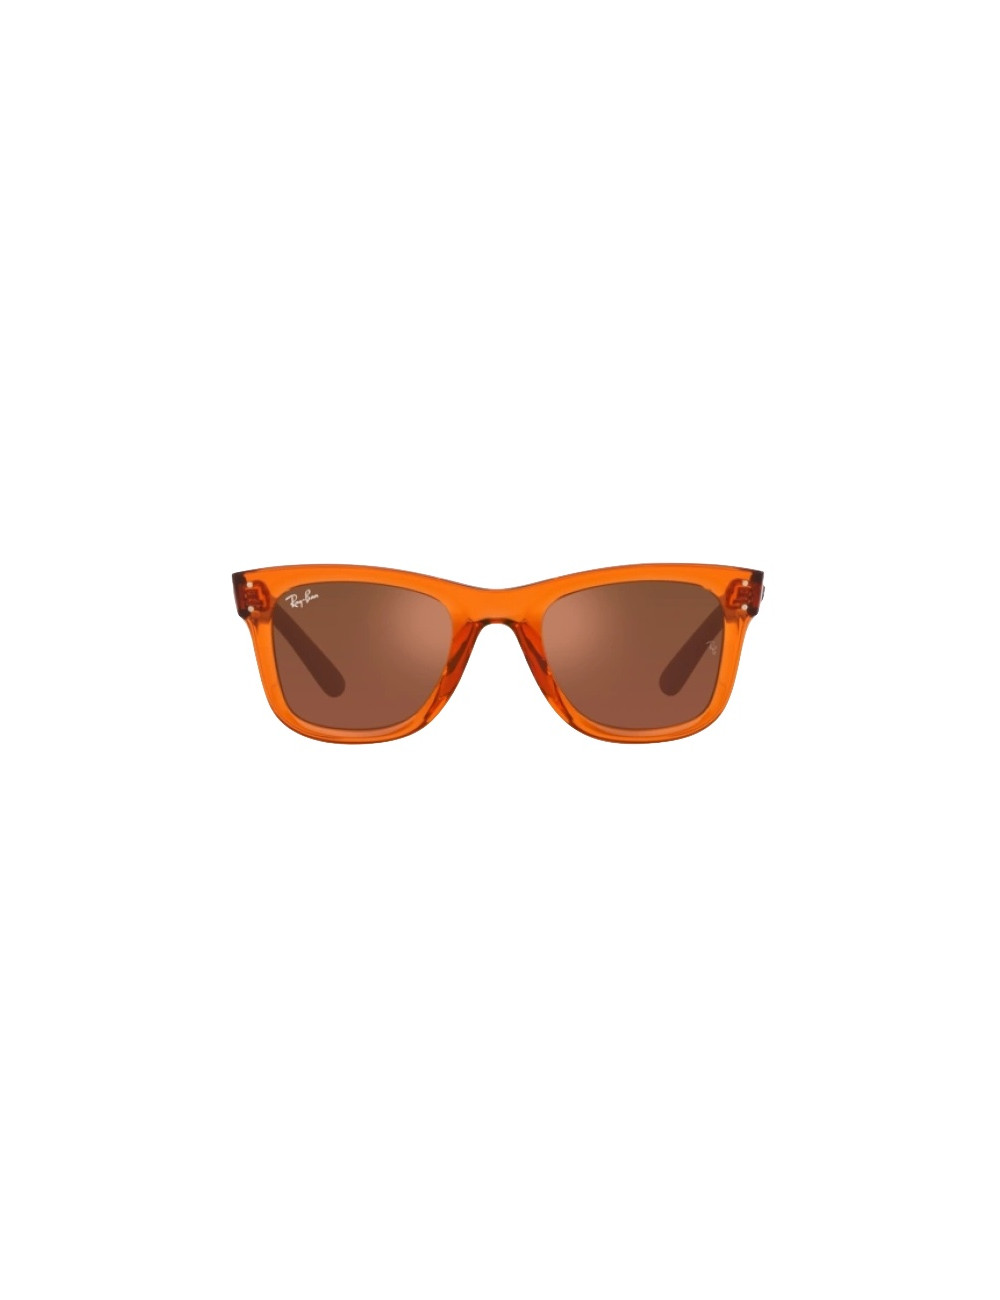 RBR0502S - Wayfarer reverse unisex sunglasses